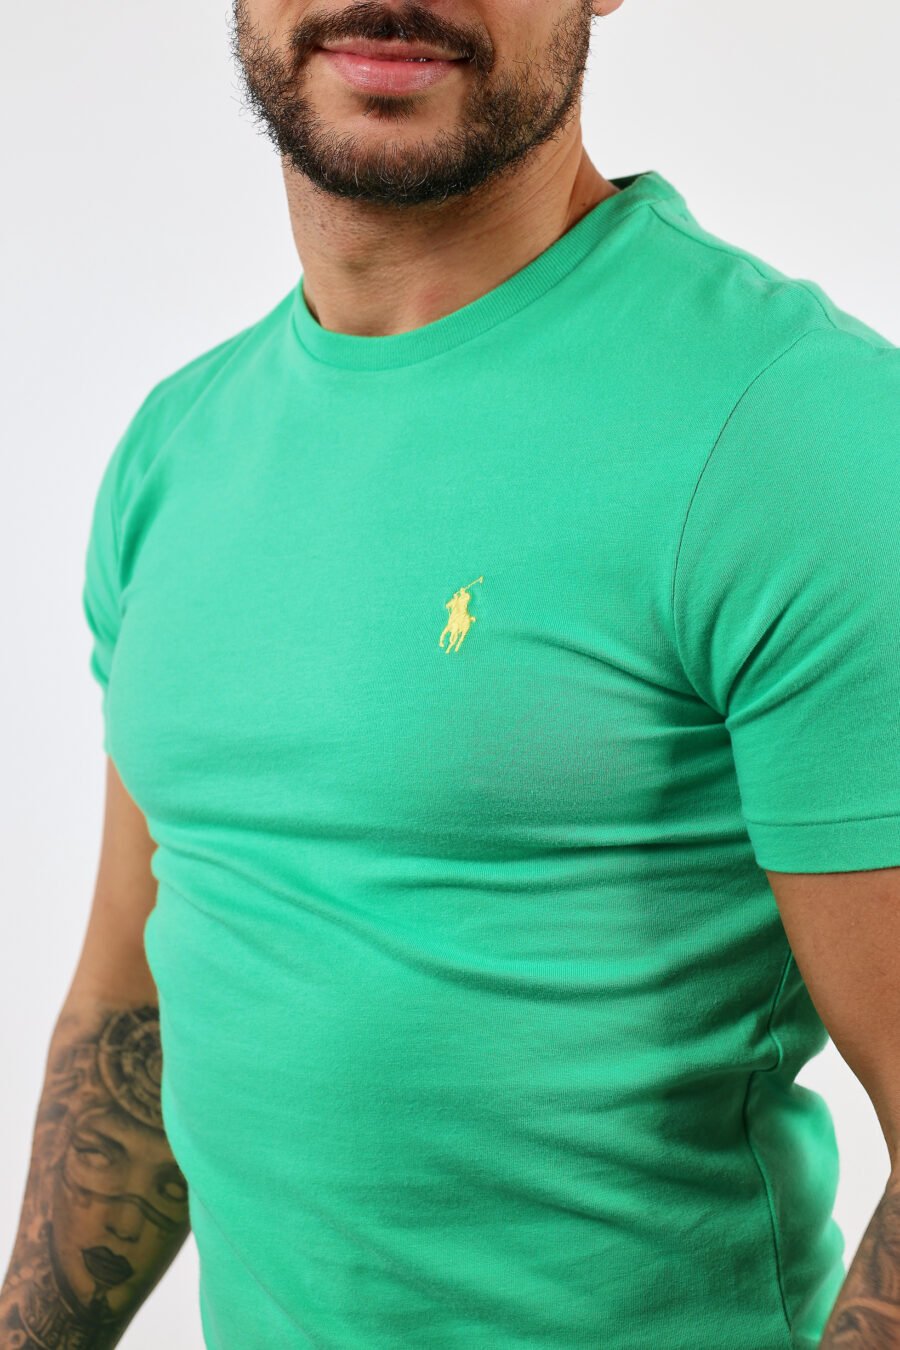 T-shirt verde e amarela com mini-logotipo "polo" - BLS Fashion 303